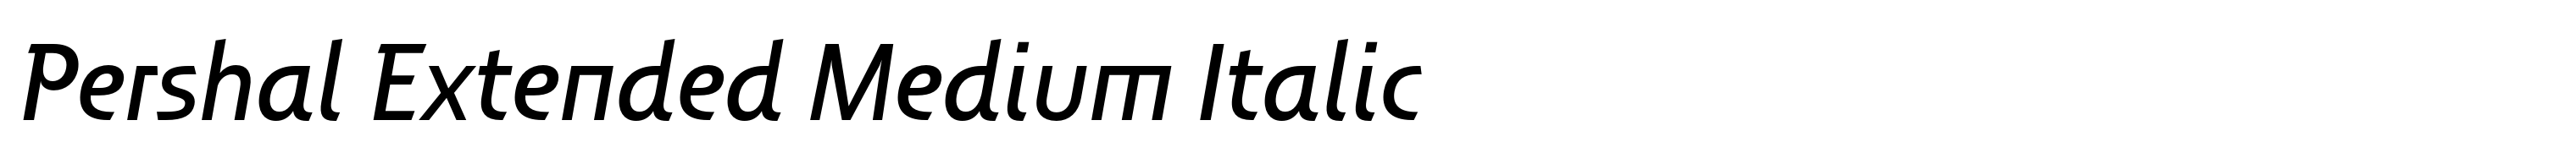 Pershal Extended Medium Italic